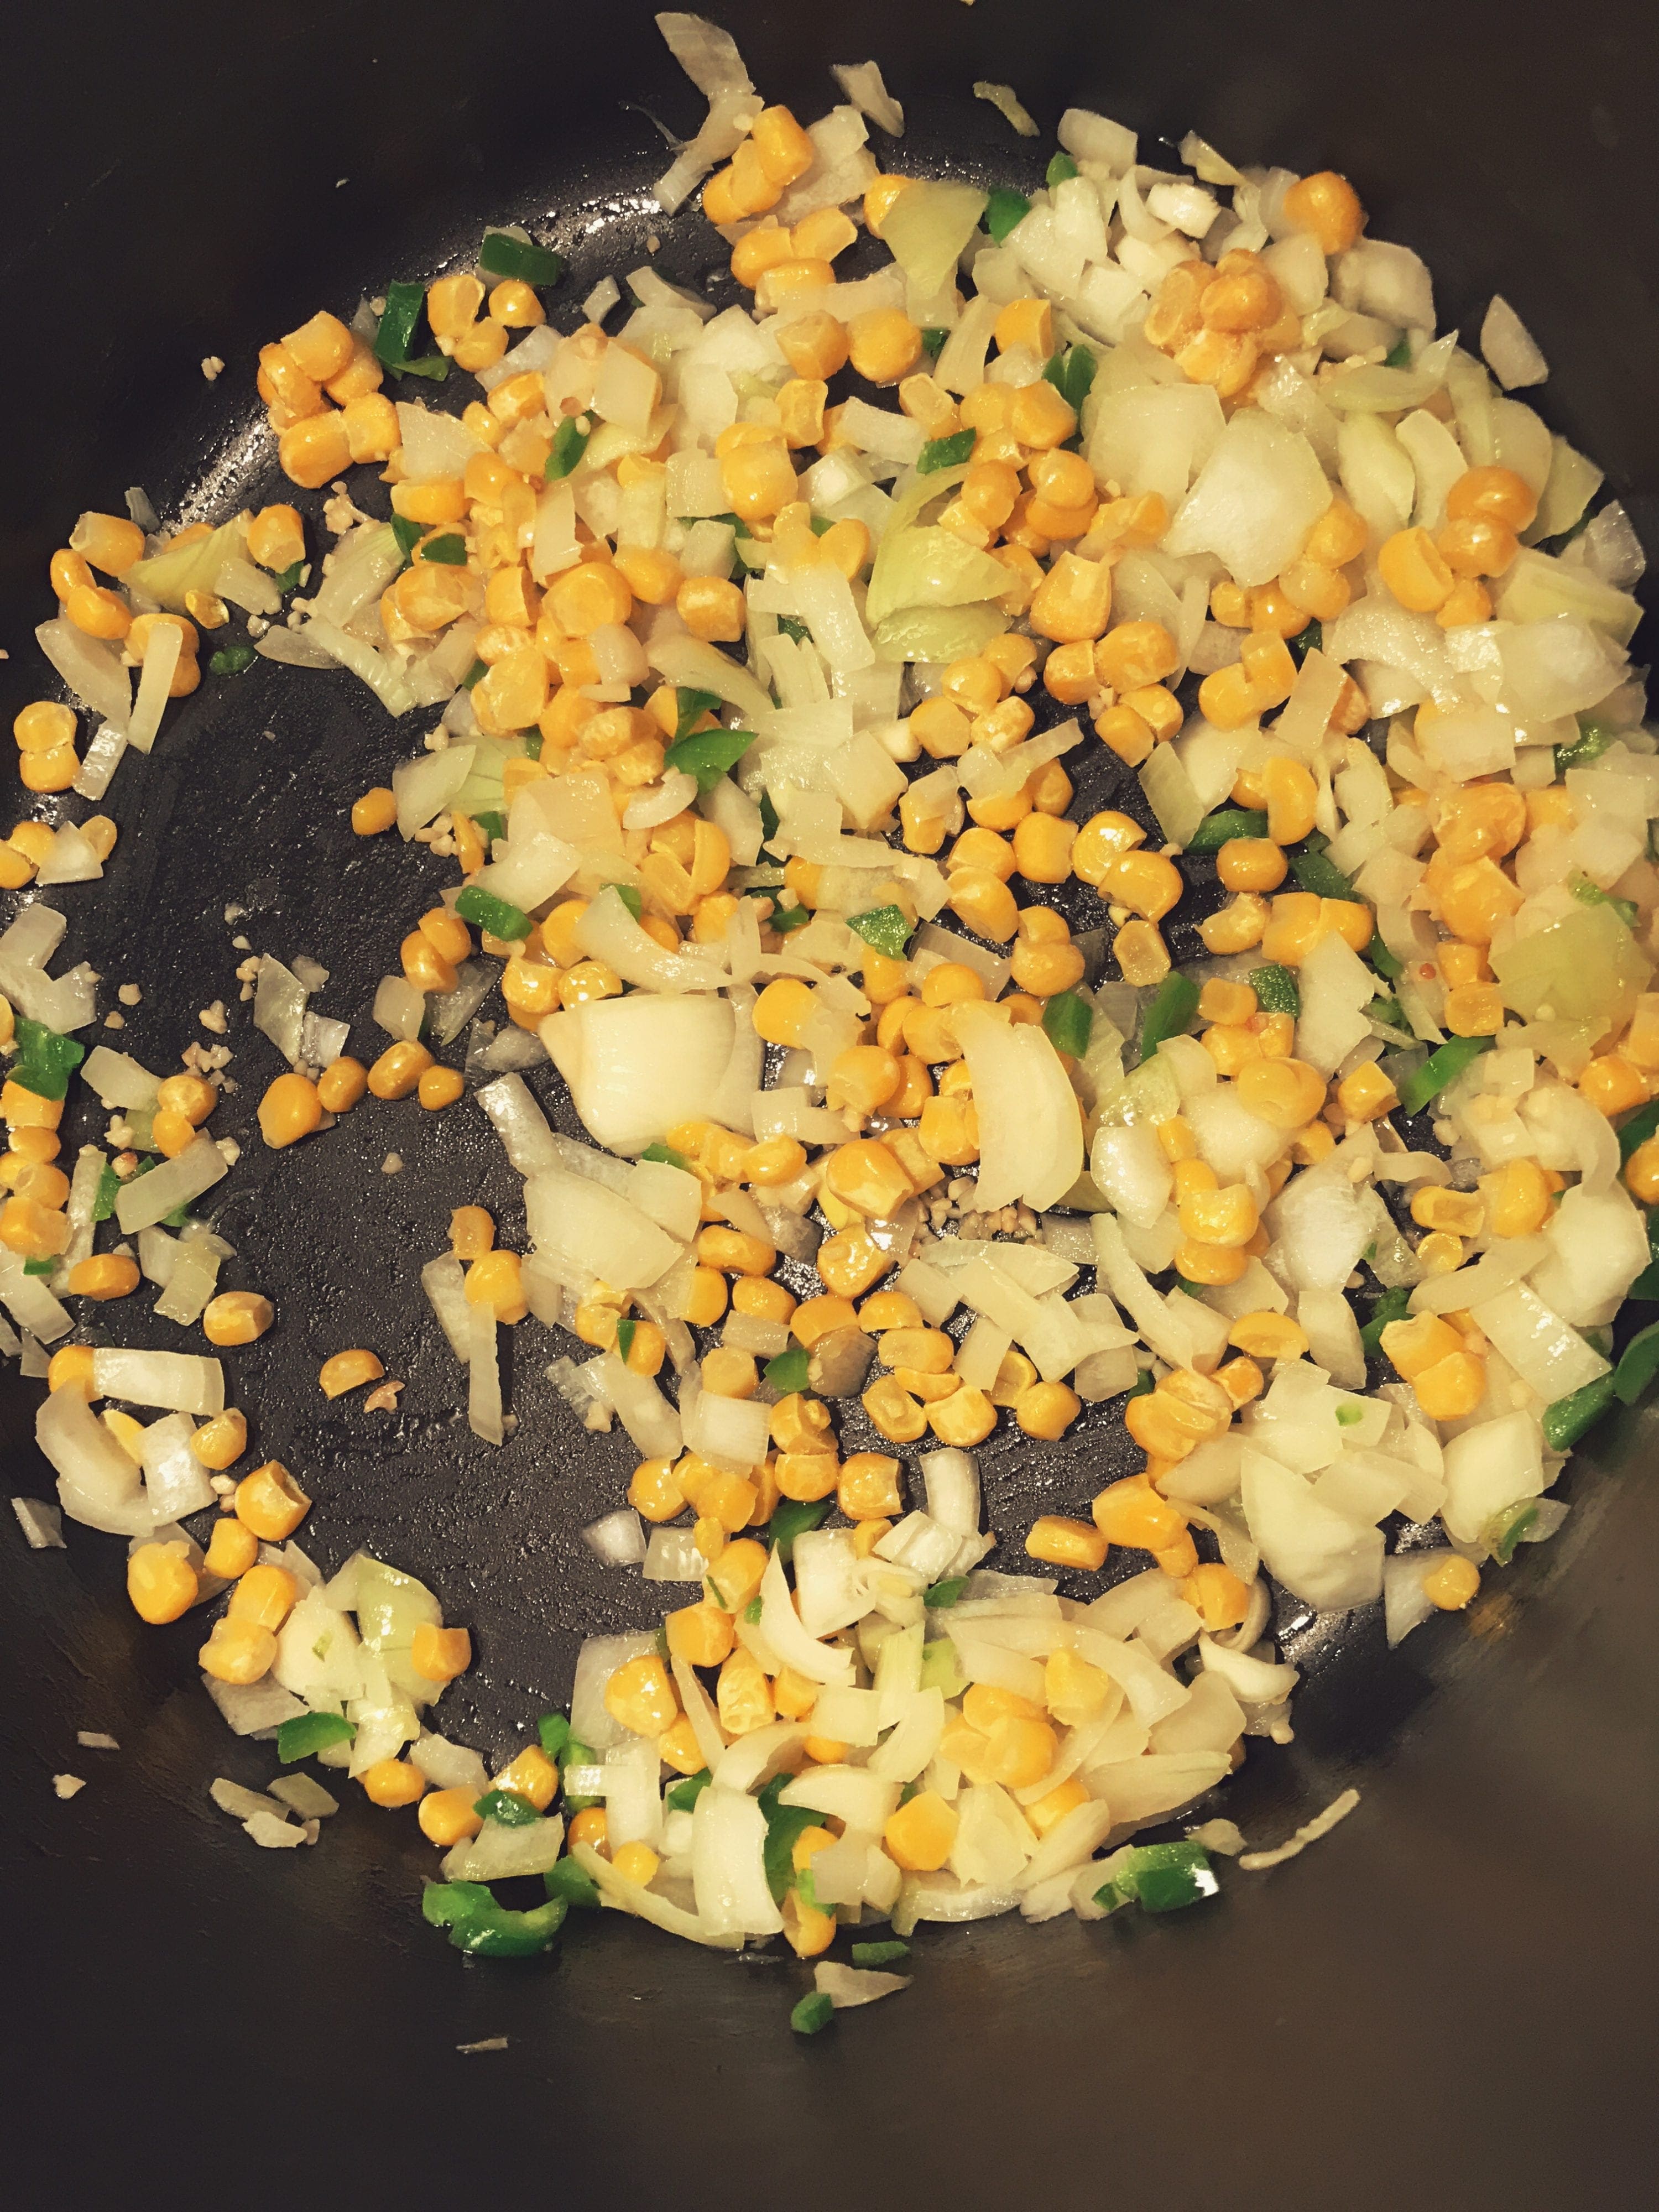 Cooking onion, jalapeno, garlic, and corn